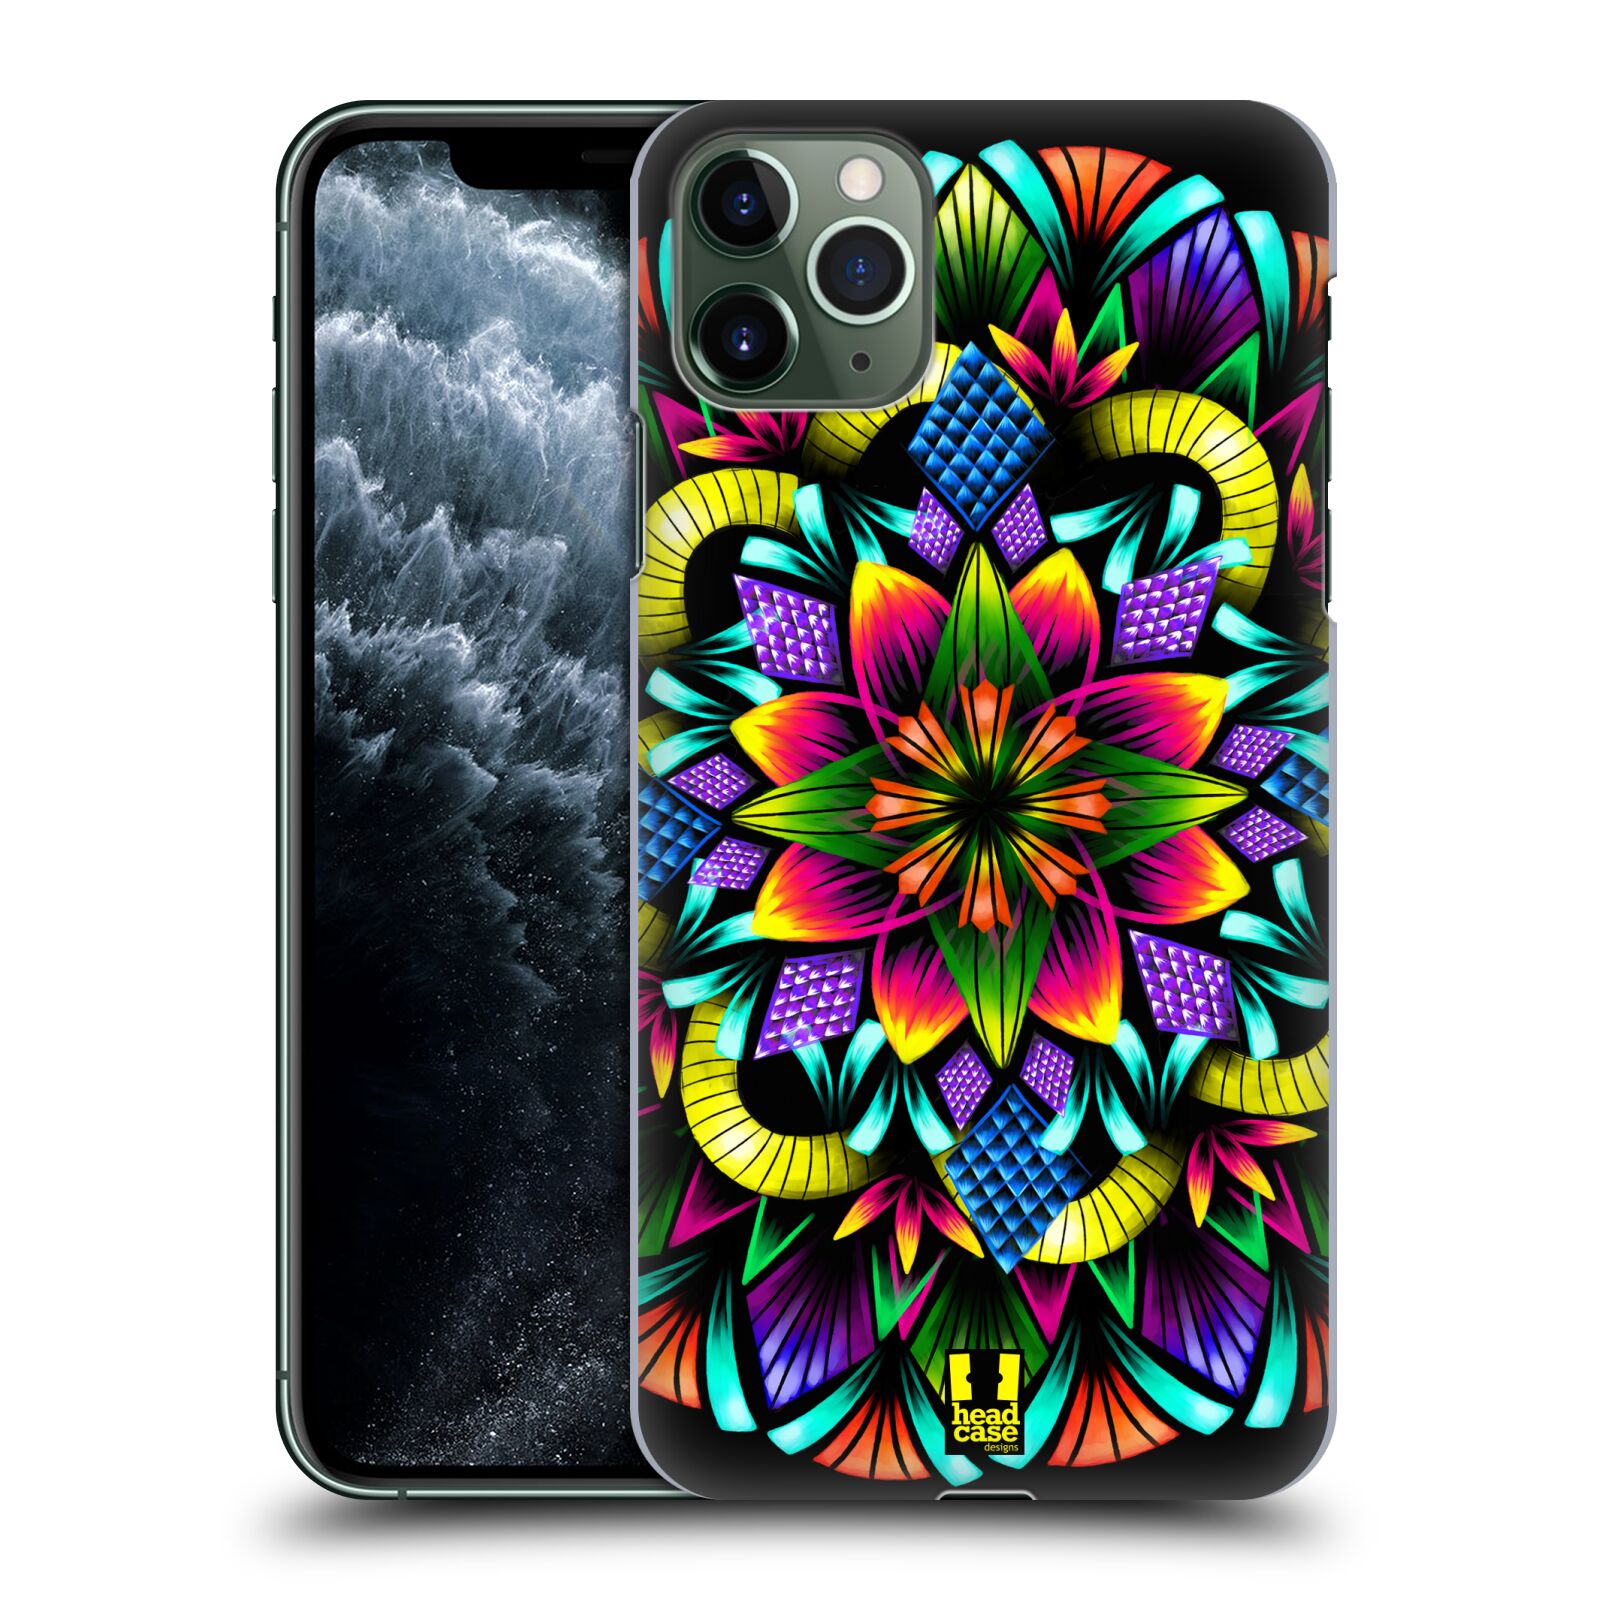 Pouzdro na mobil Apple Iphone 11 PRO MAX - HEAD CASE - vzor Indie Mandala kaleidoskop barevný vzor KVĚTINA